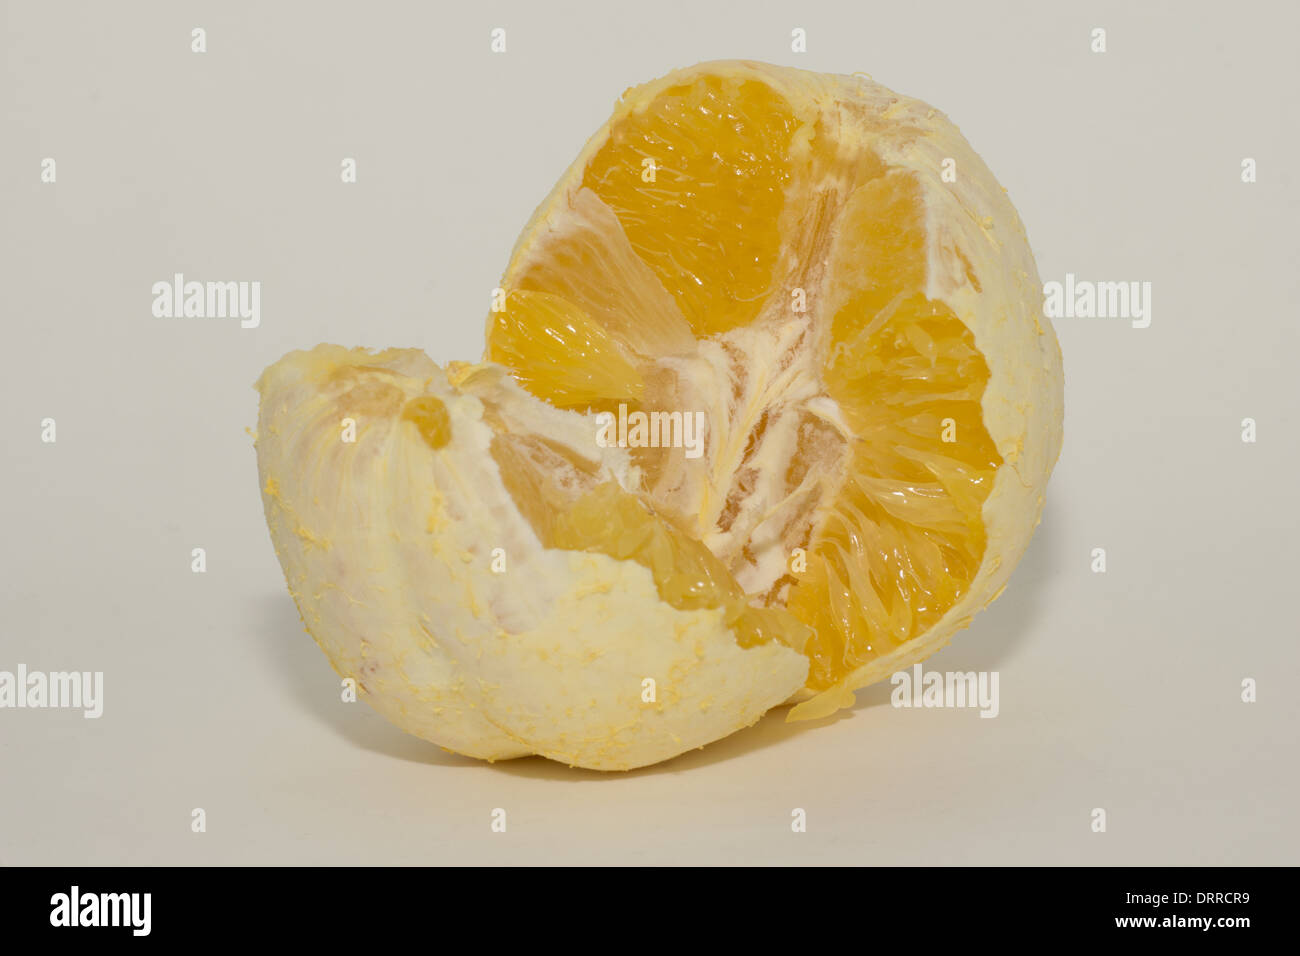 Peeled split open orange Stock Photo